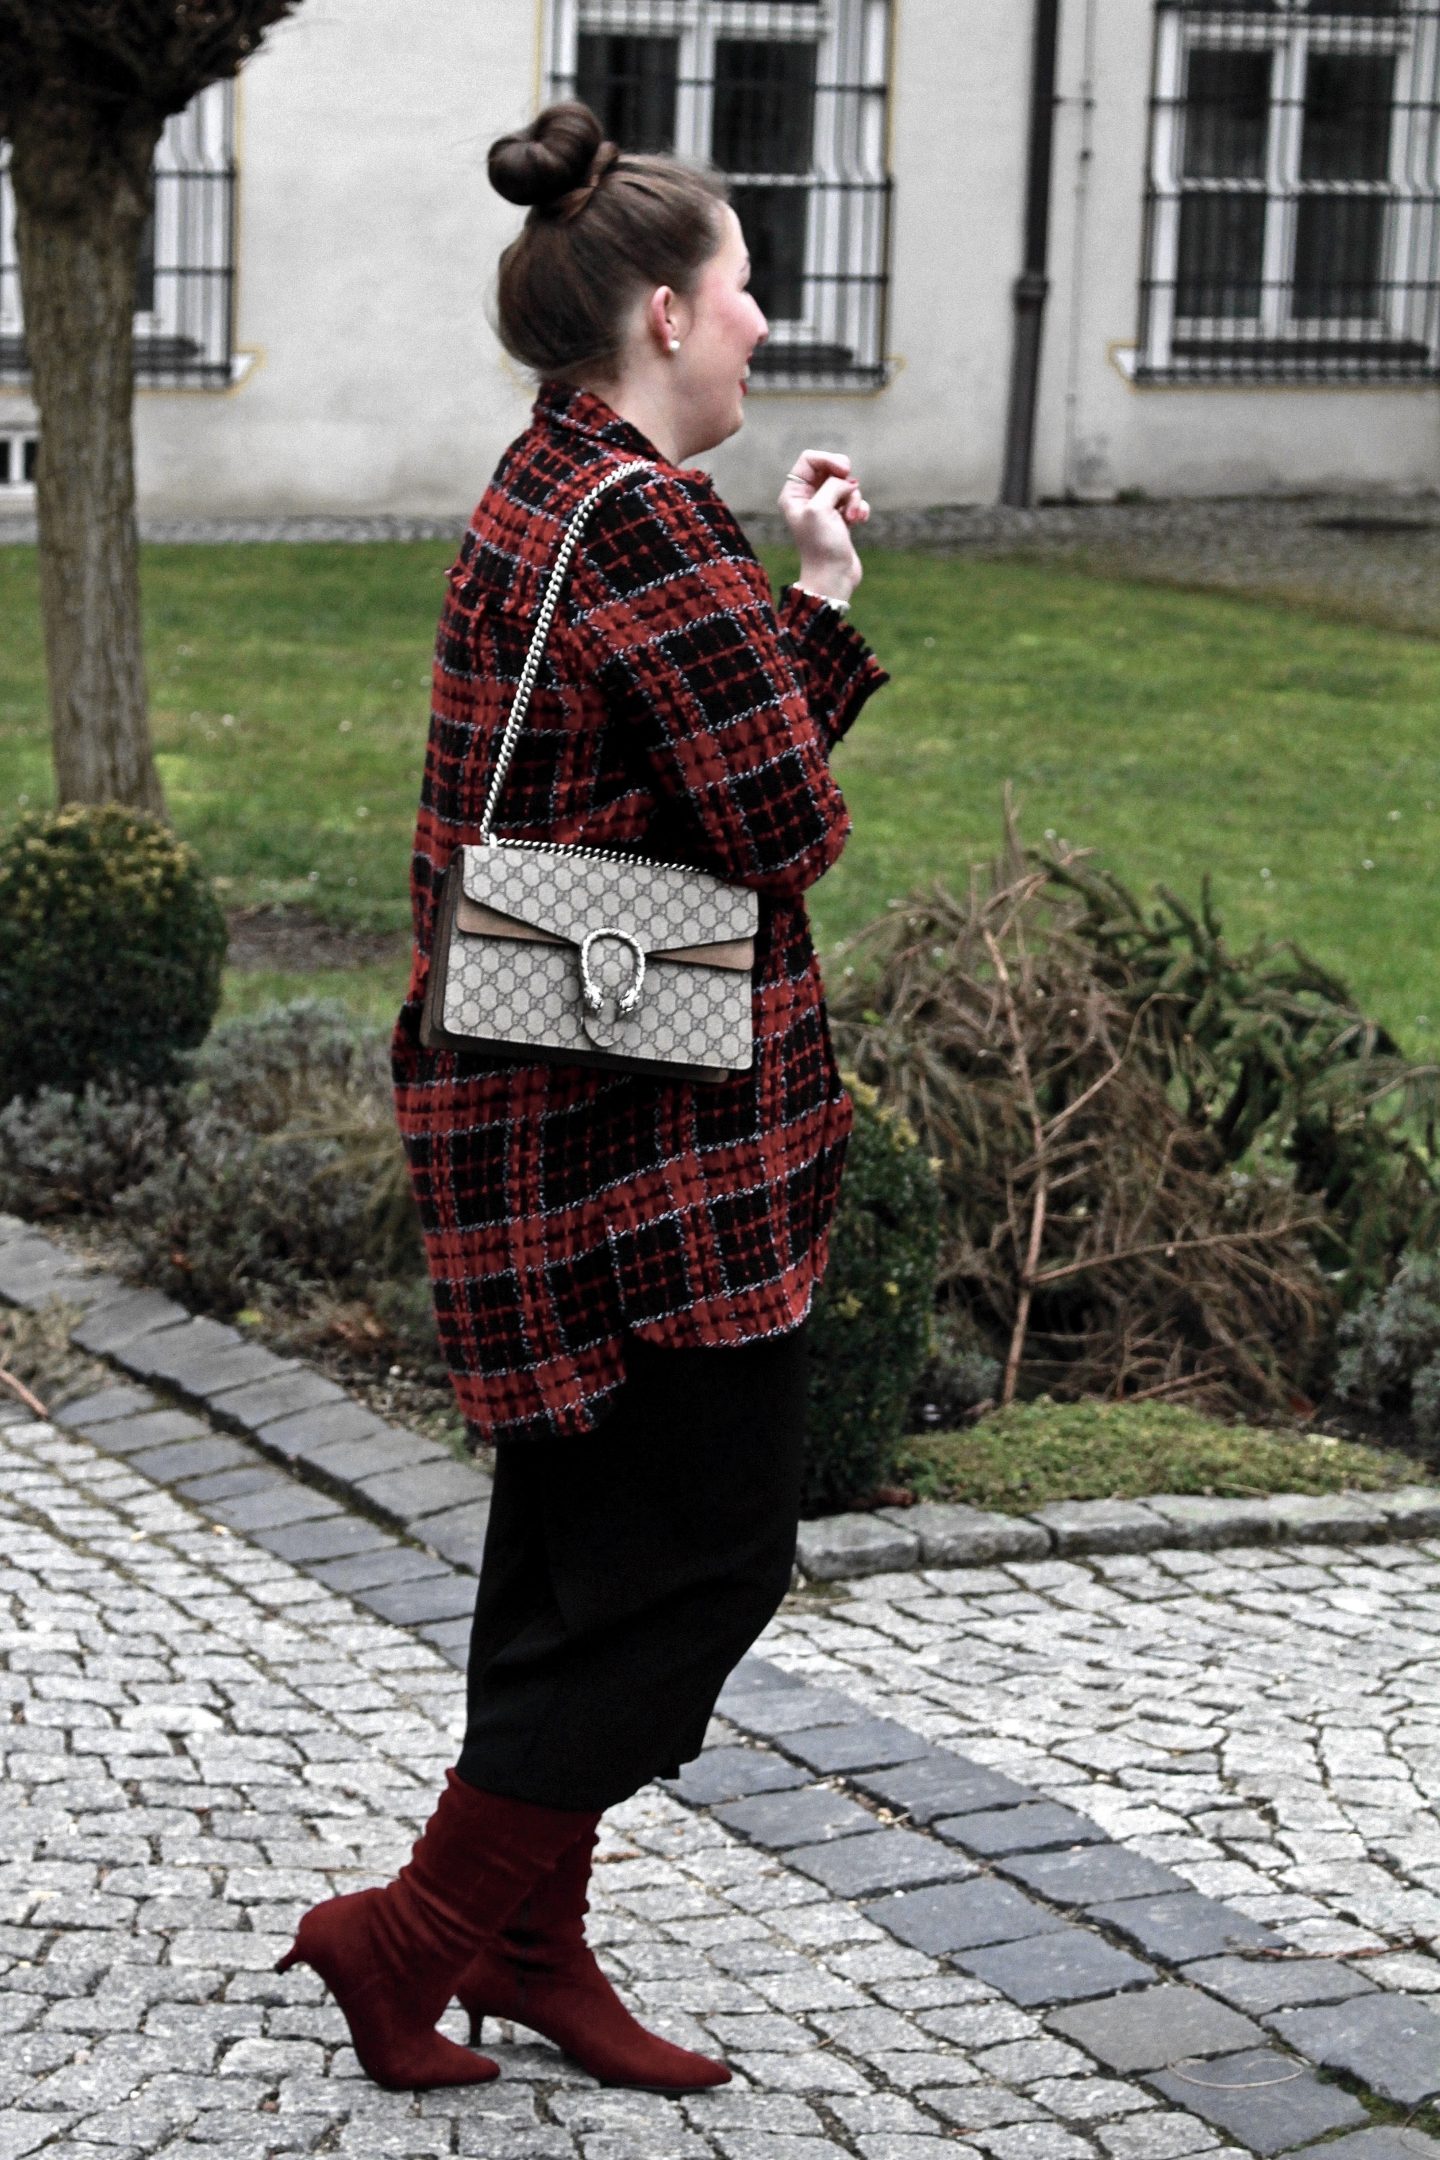 karomantel-karierter-mantel-culottes-rote-stiefel-gucci-dionysus-fashionblogger